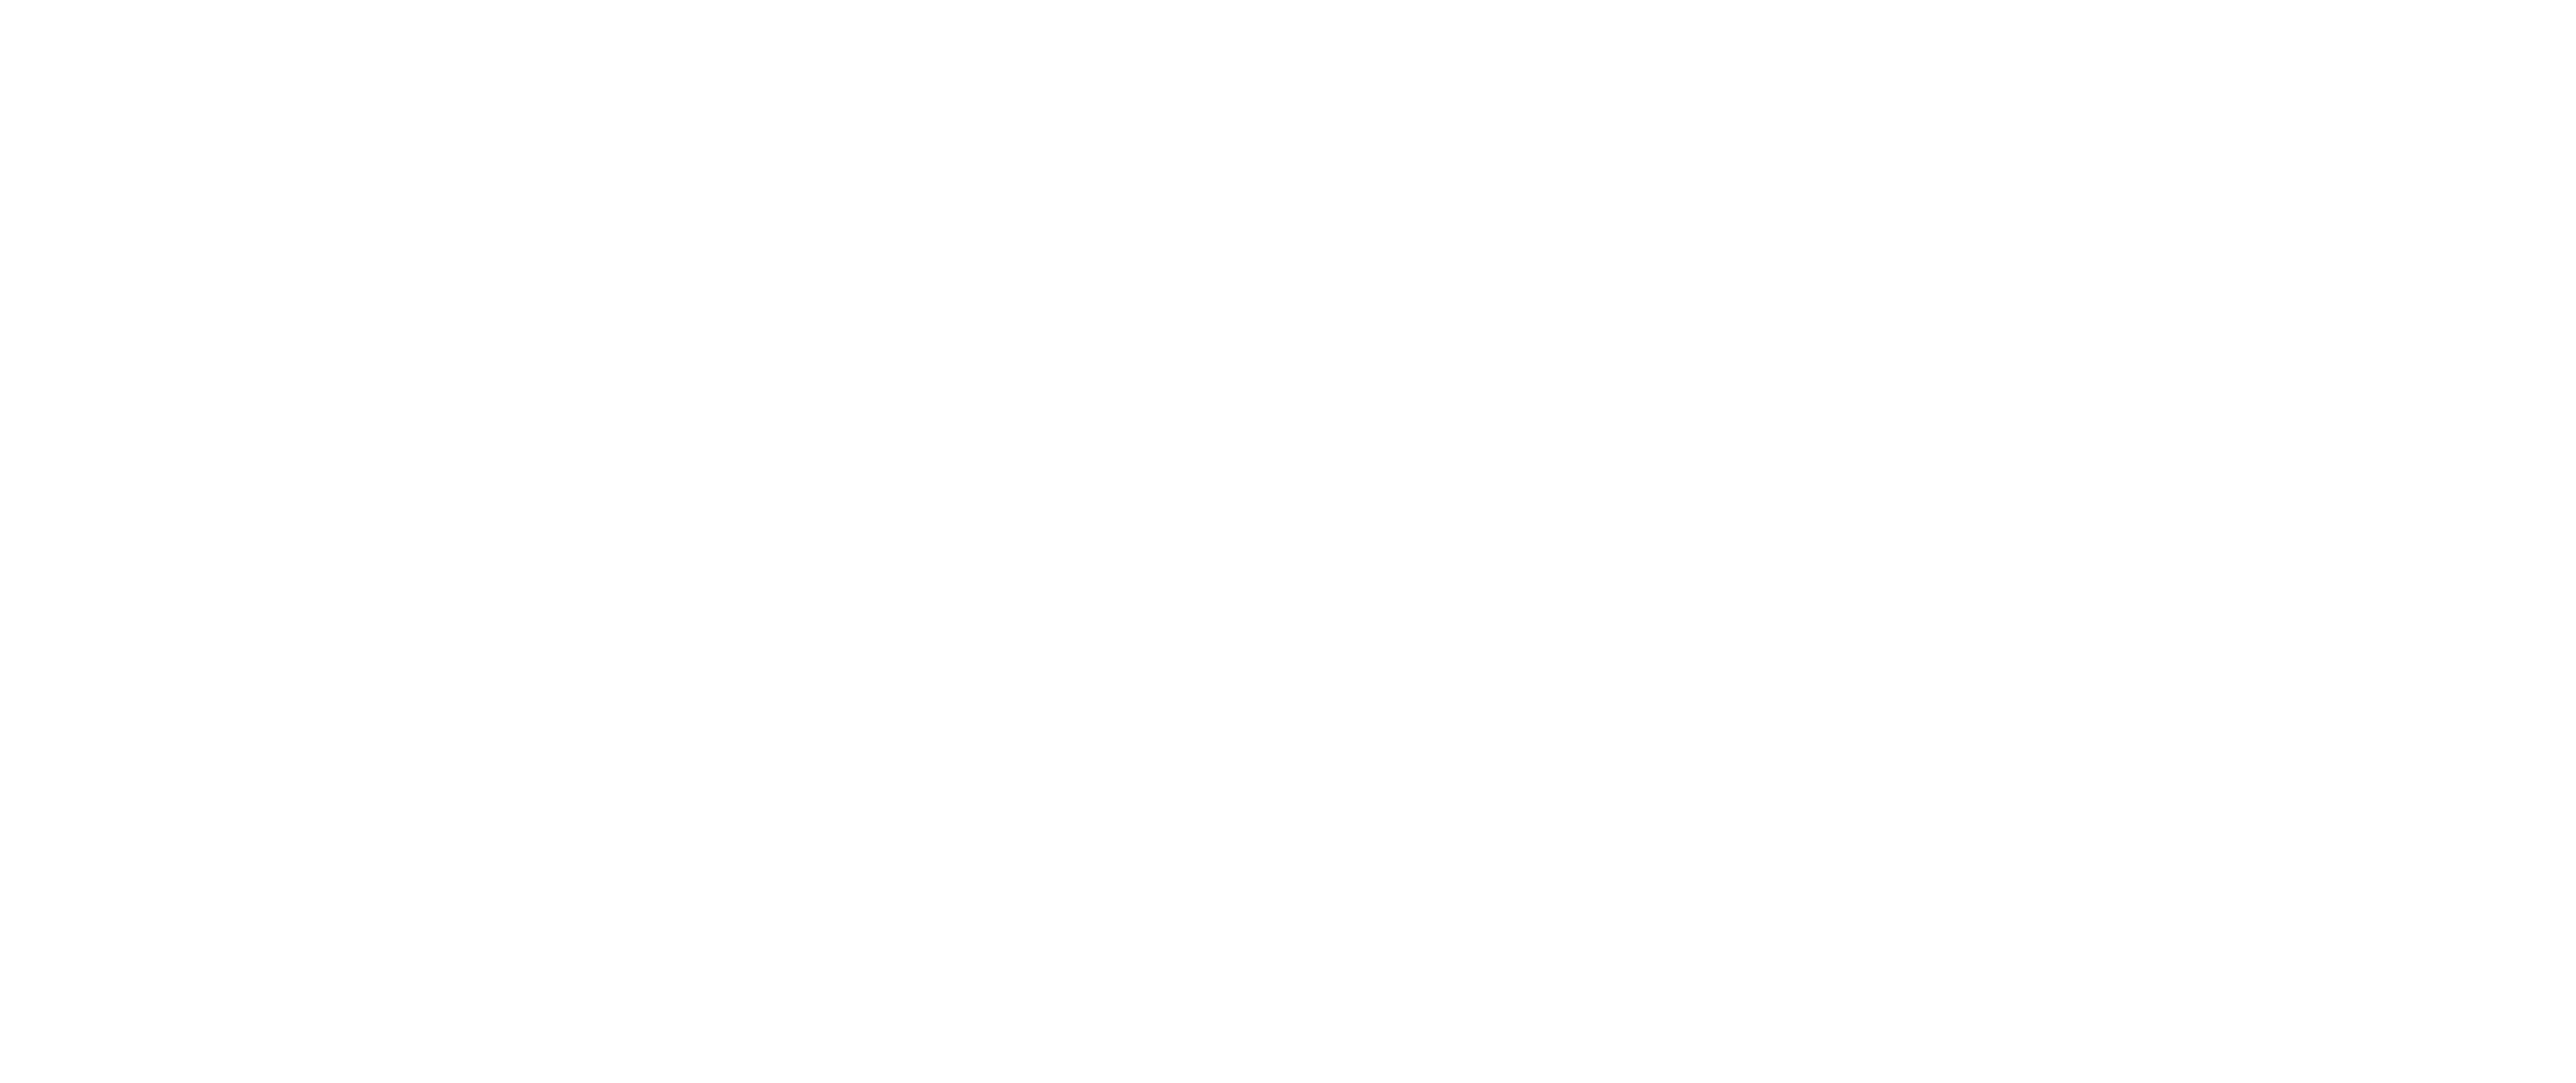 Willow: Behind the Magic logo